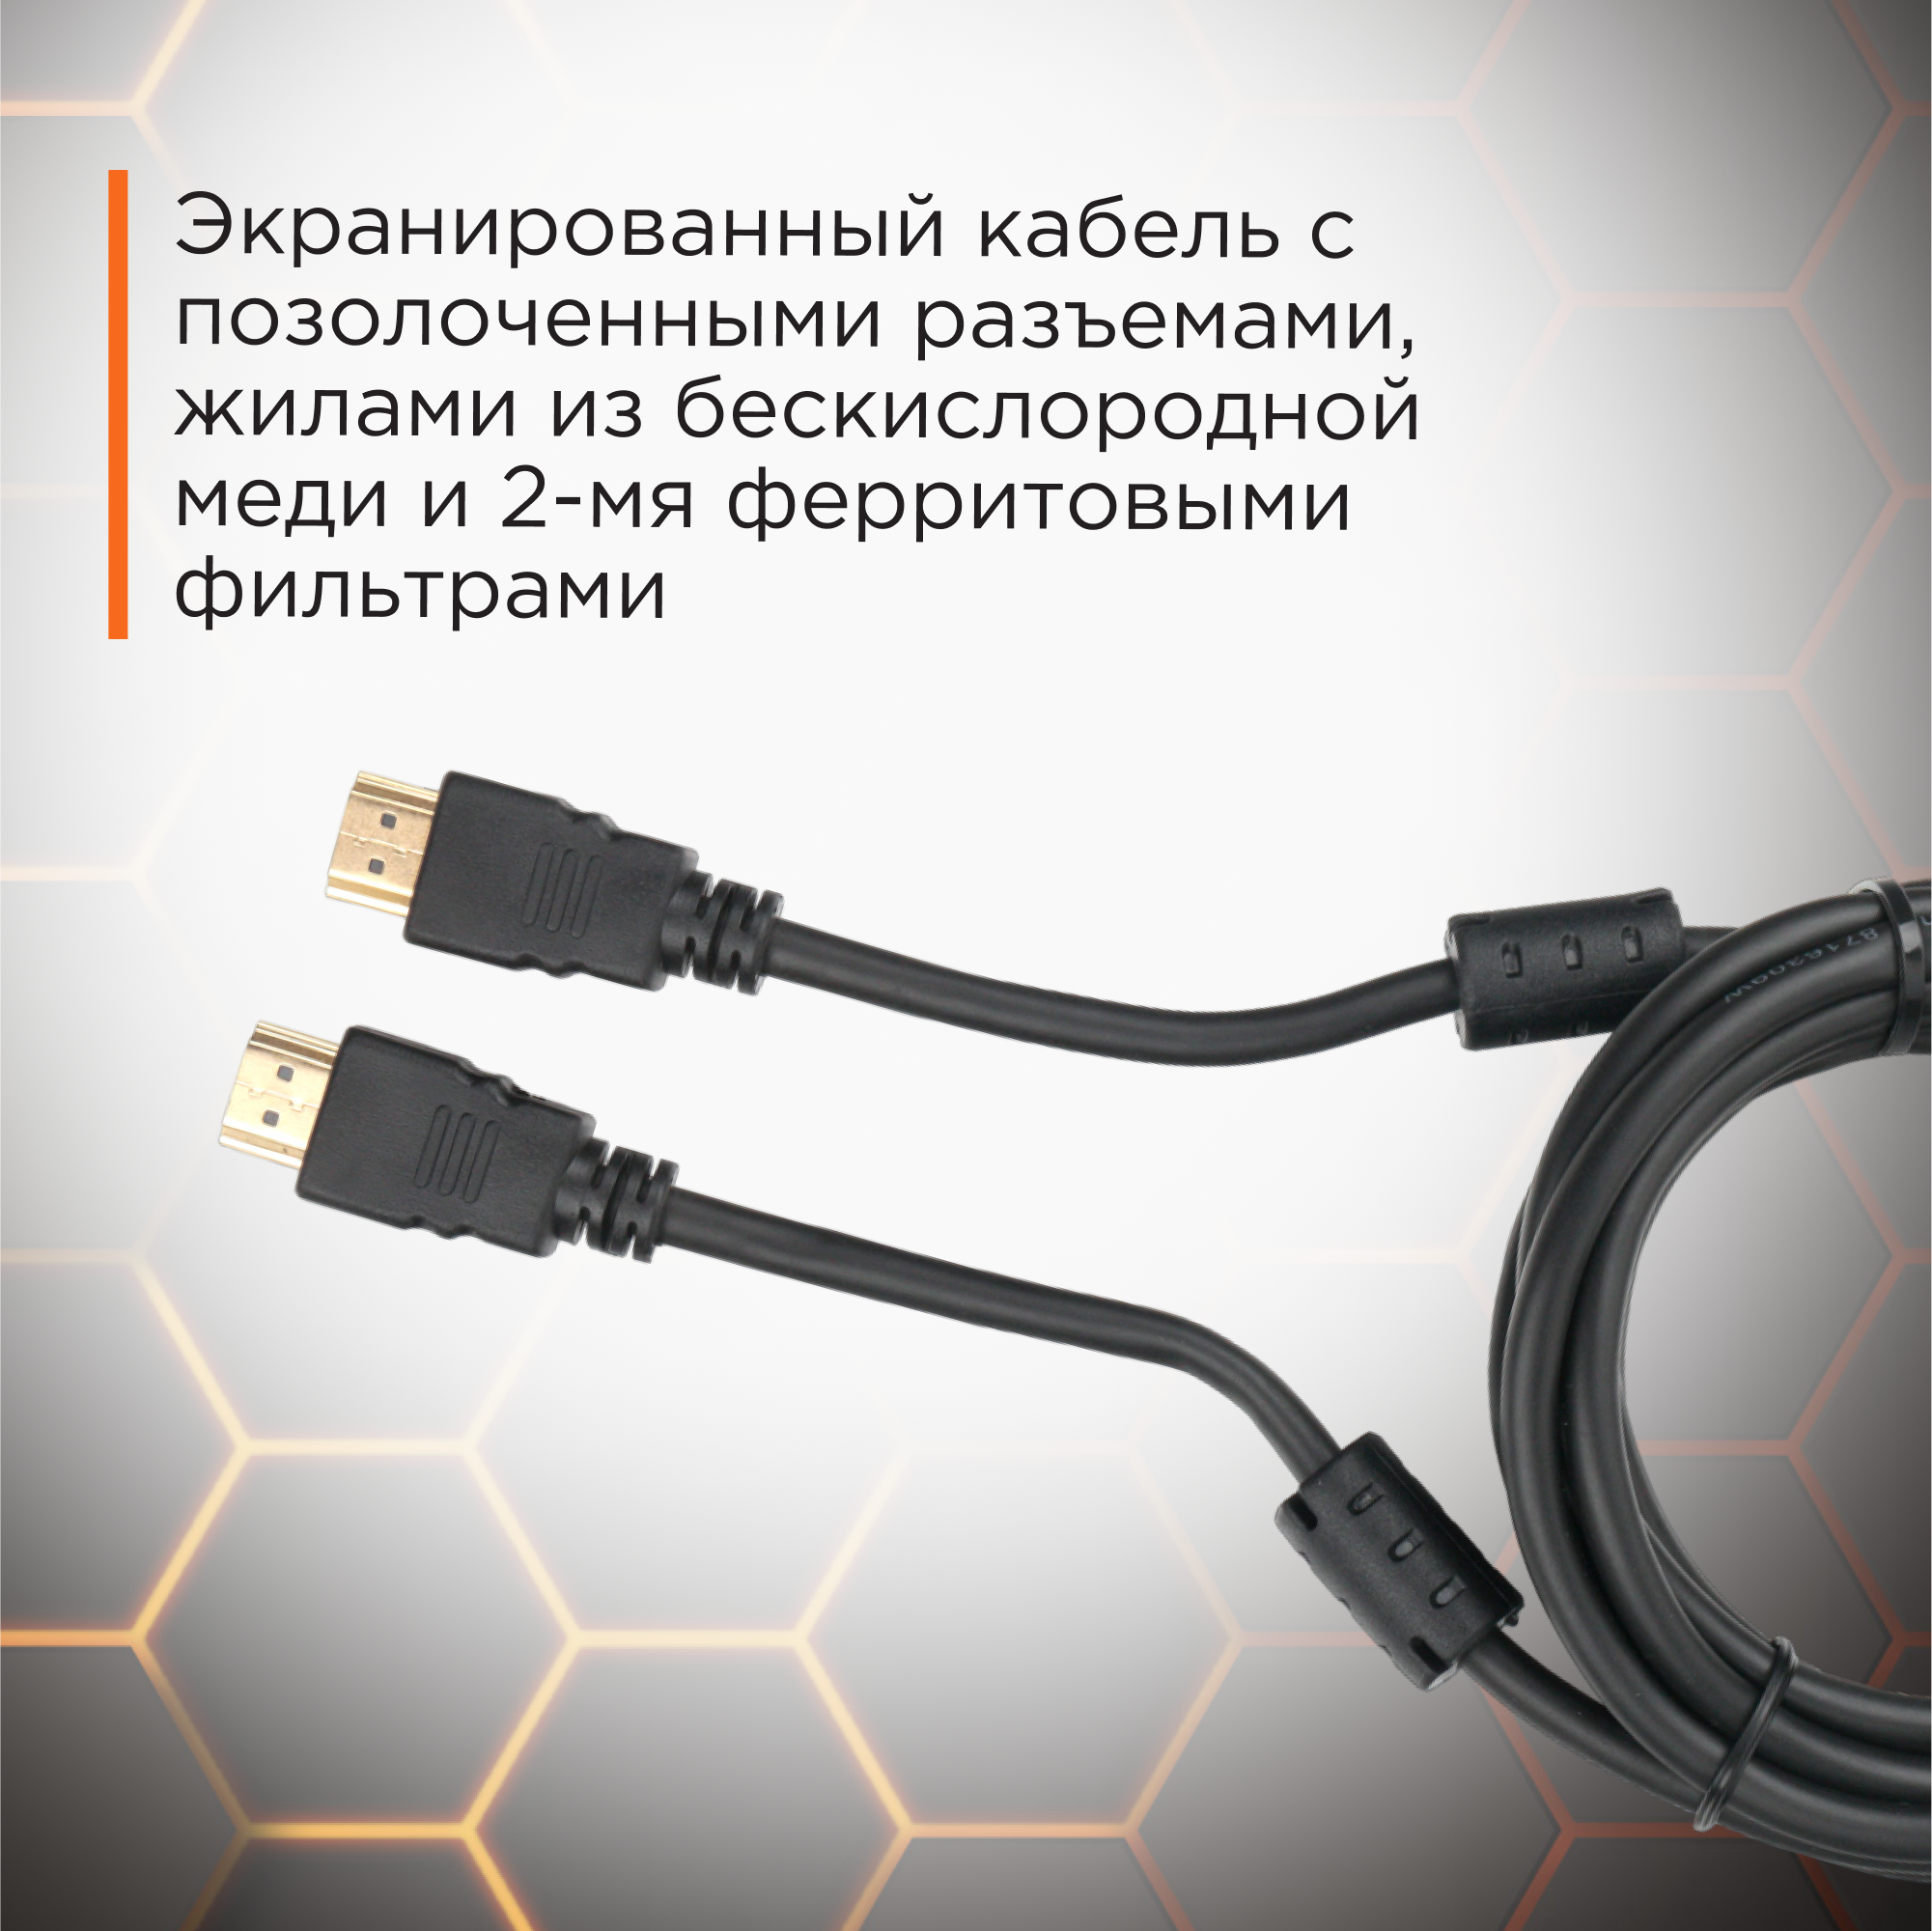 HDMI кабель Cablexpert CCF2-HDMI4-1M